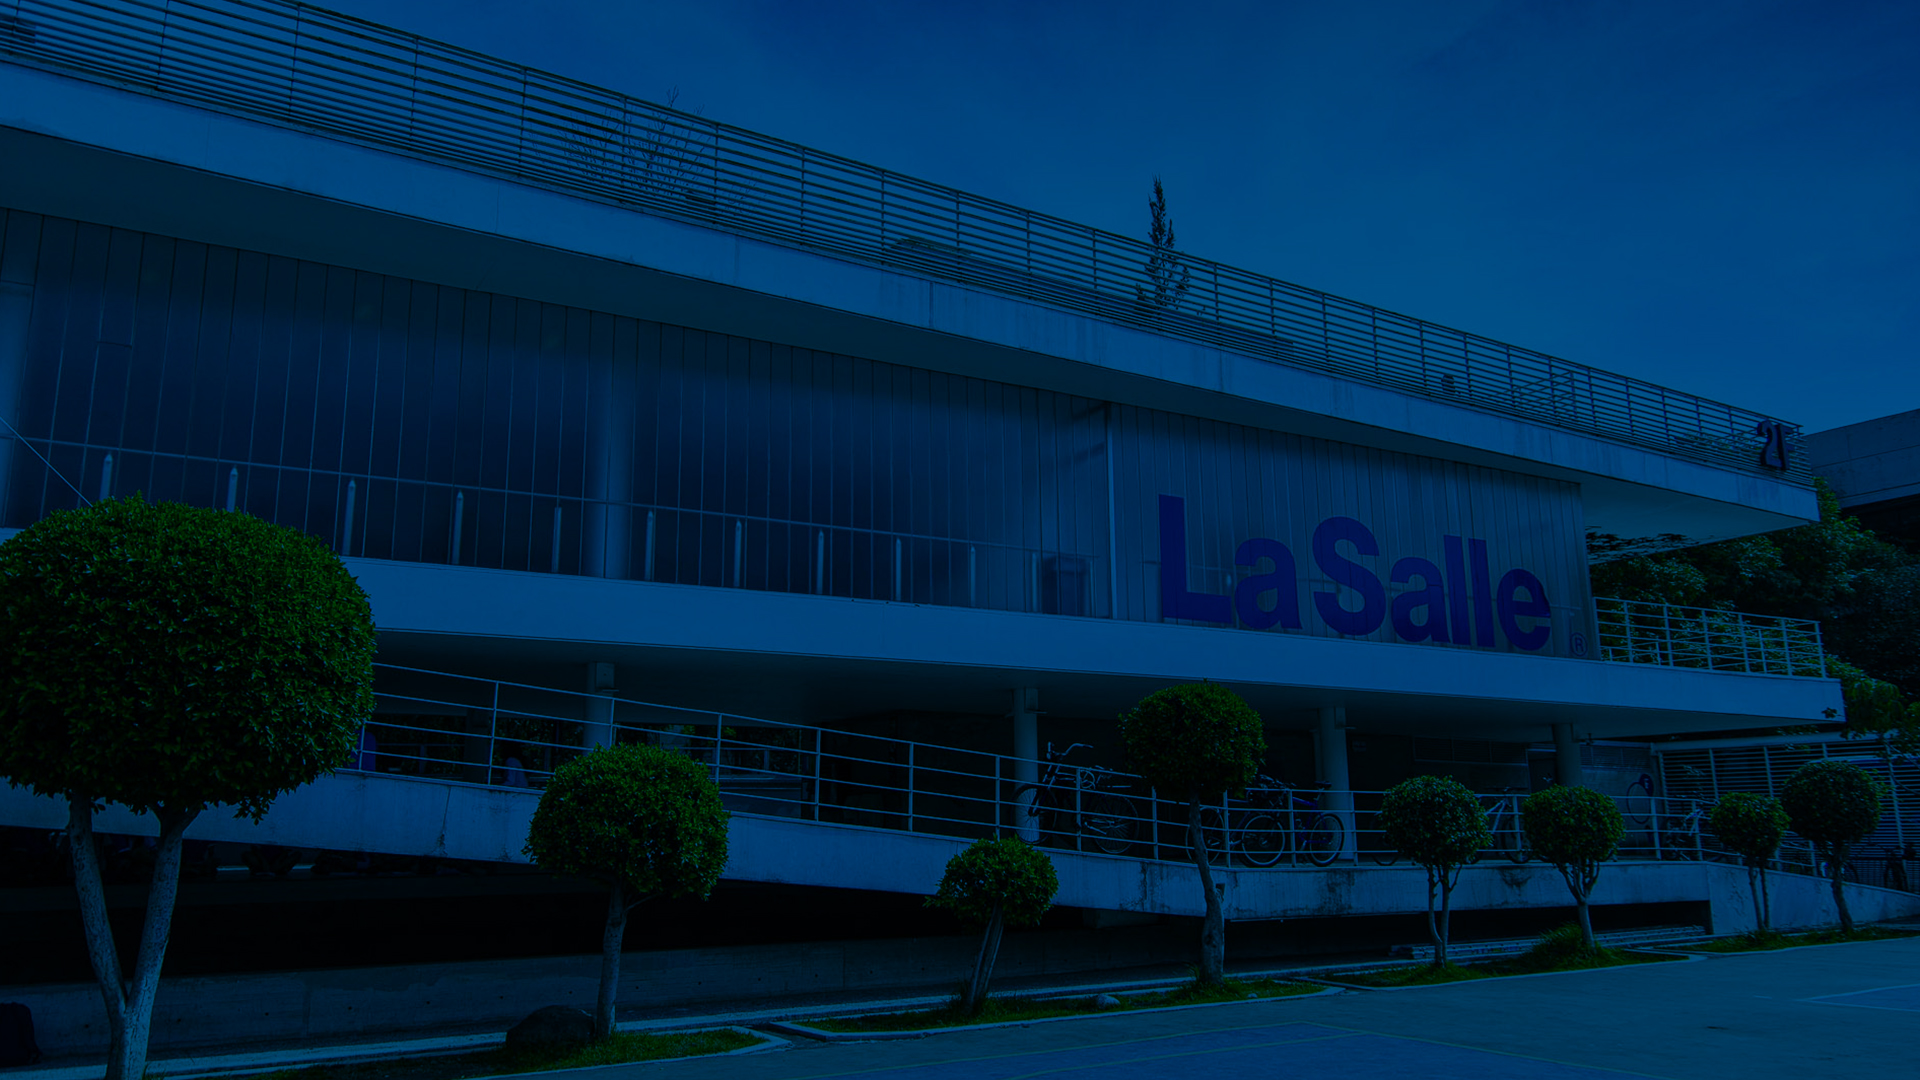 Universidad La Salle - Awards